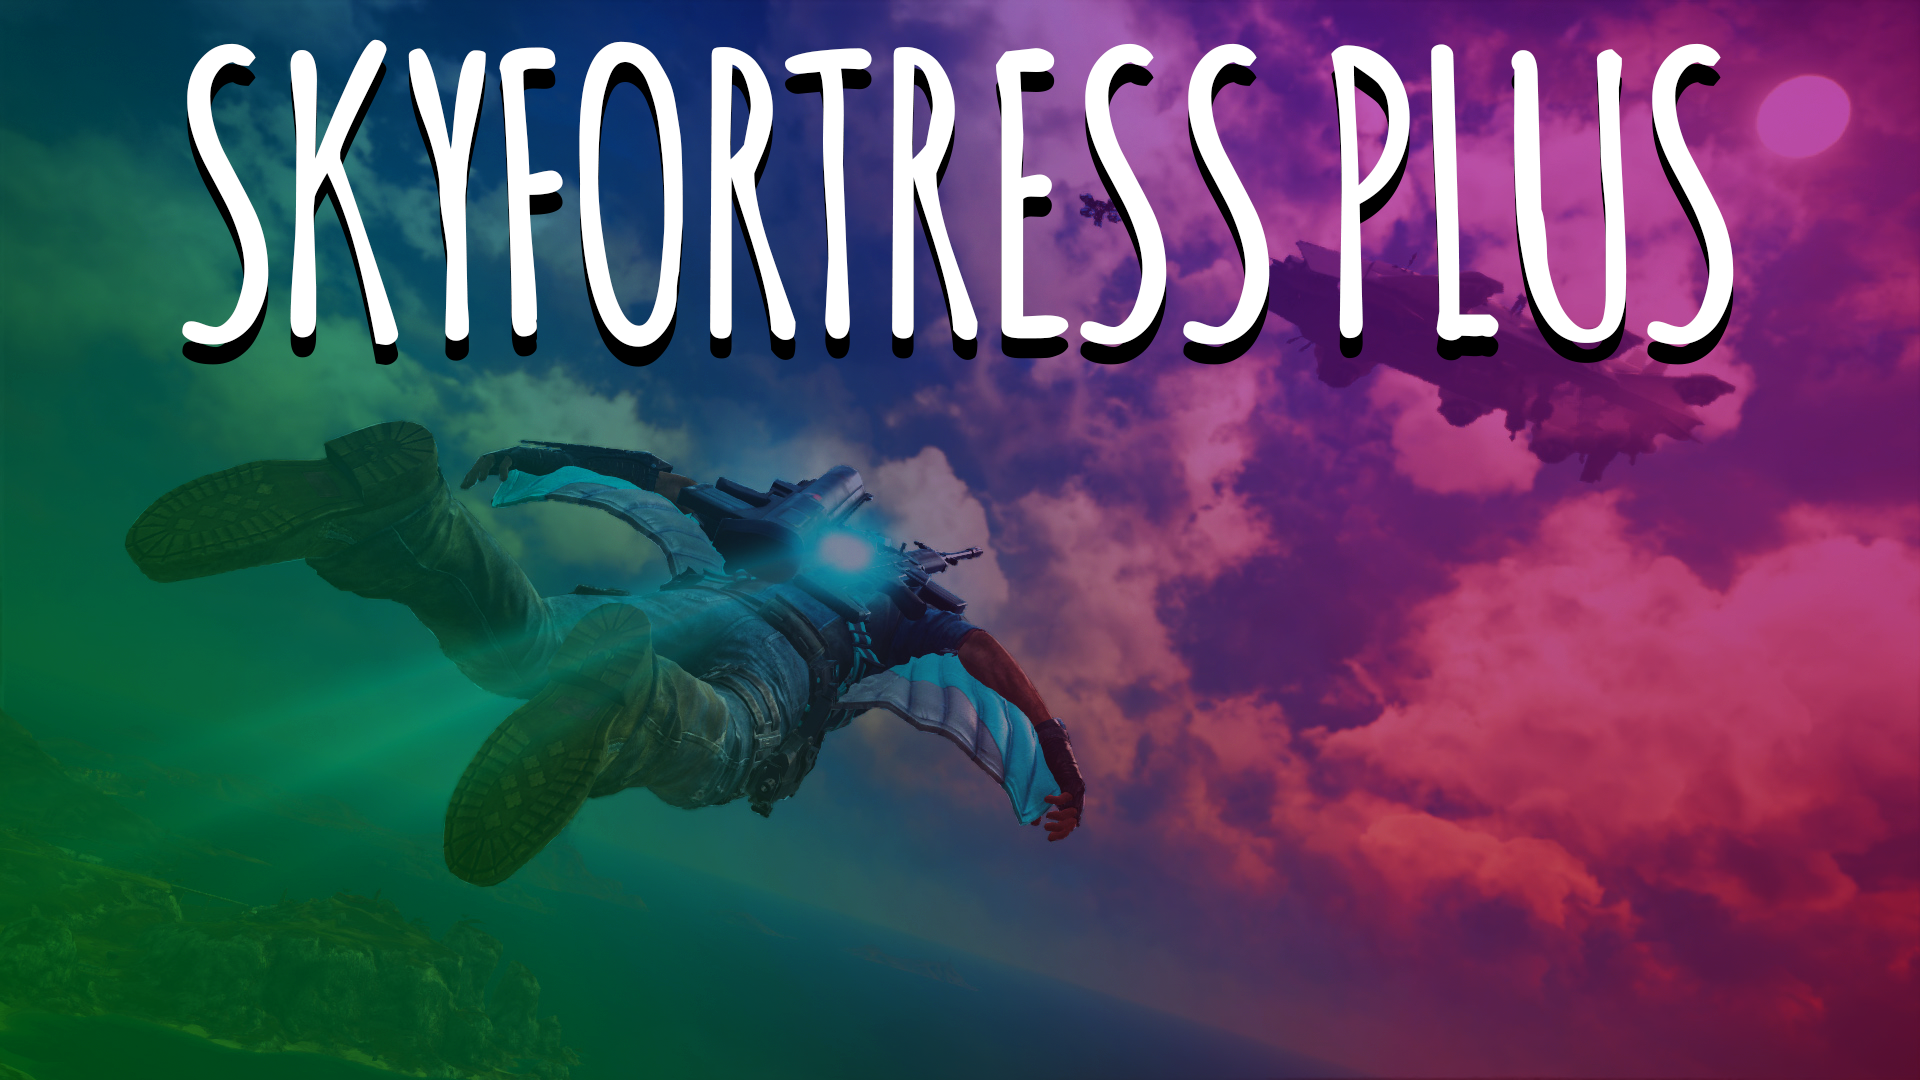 SkyFortress Plus